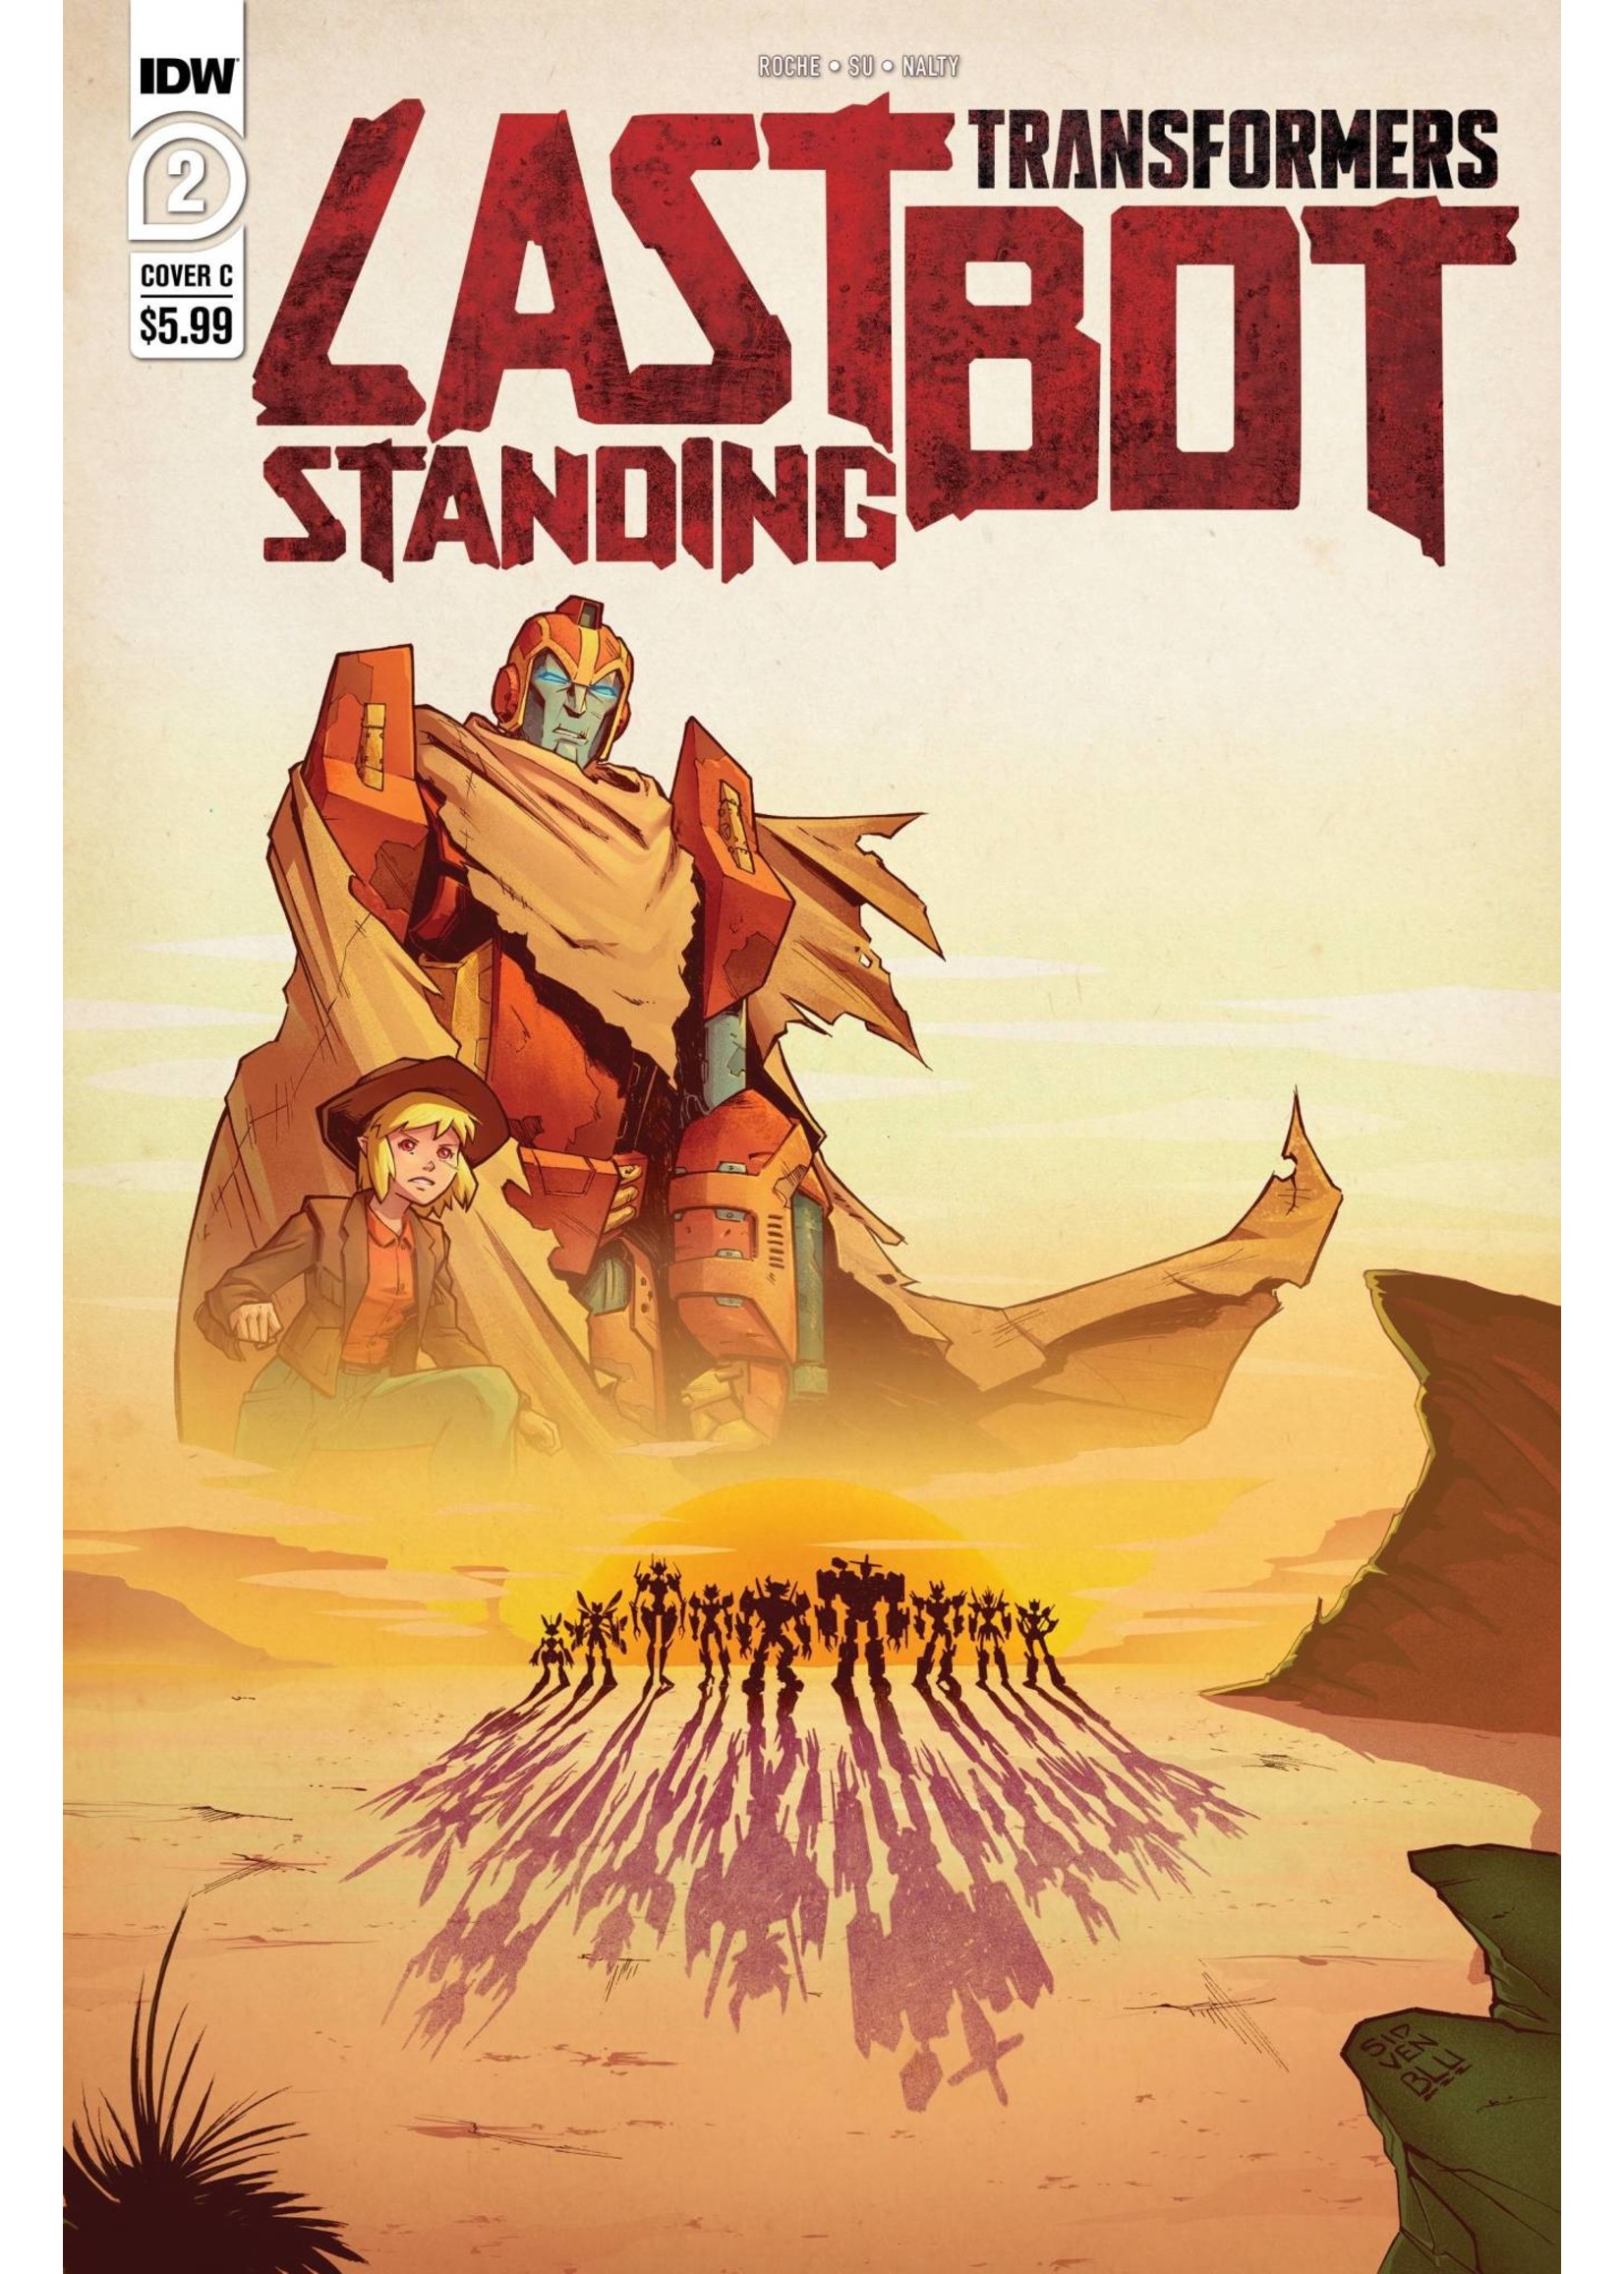 Transformers Transformers: Last Bot Standing #2